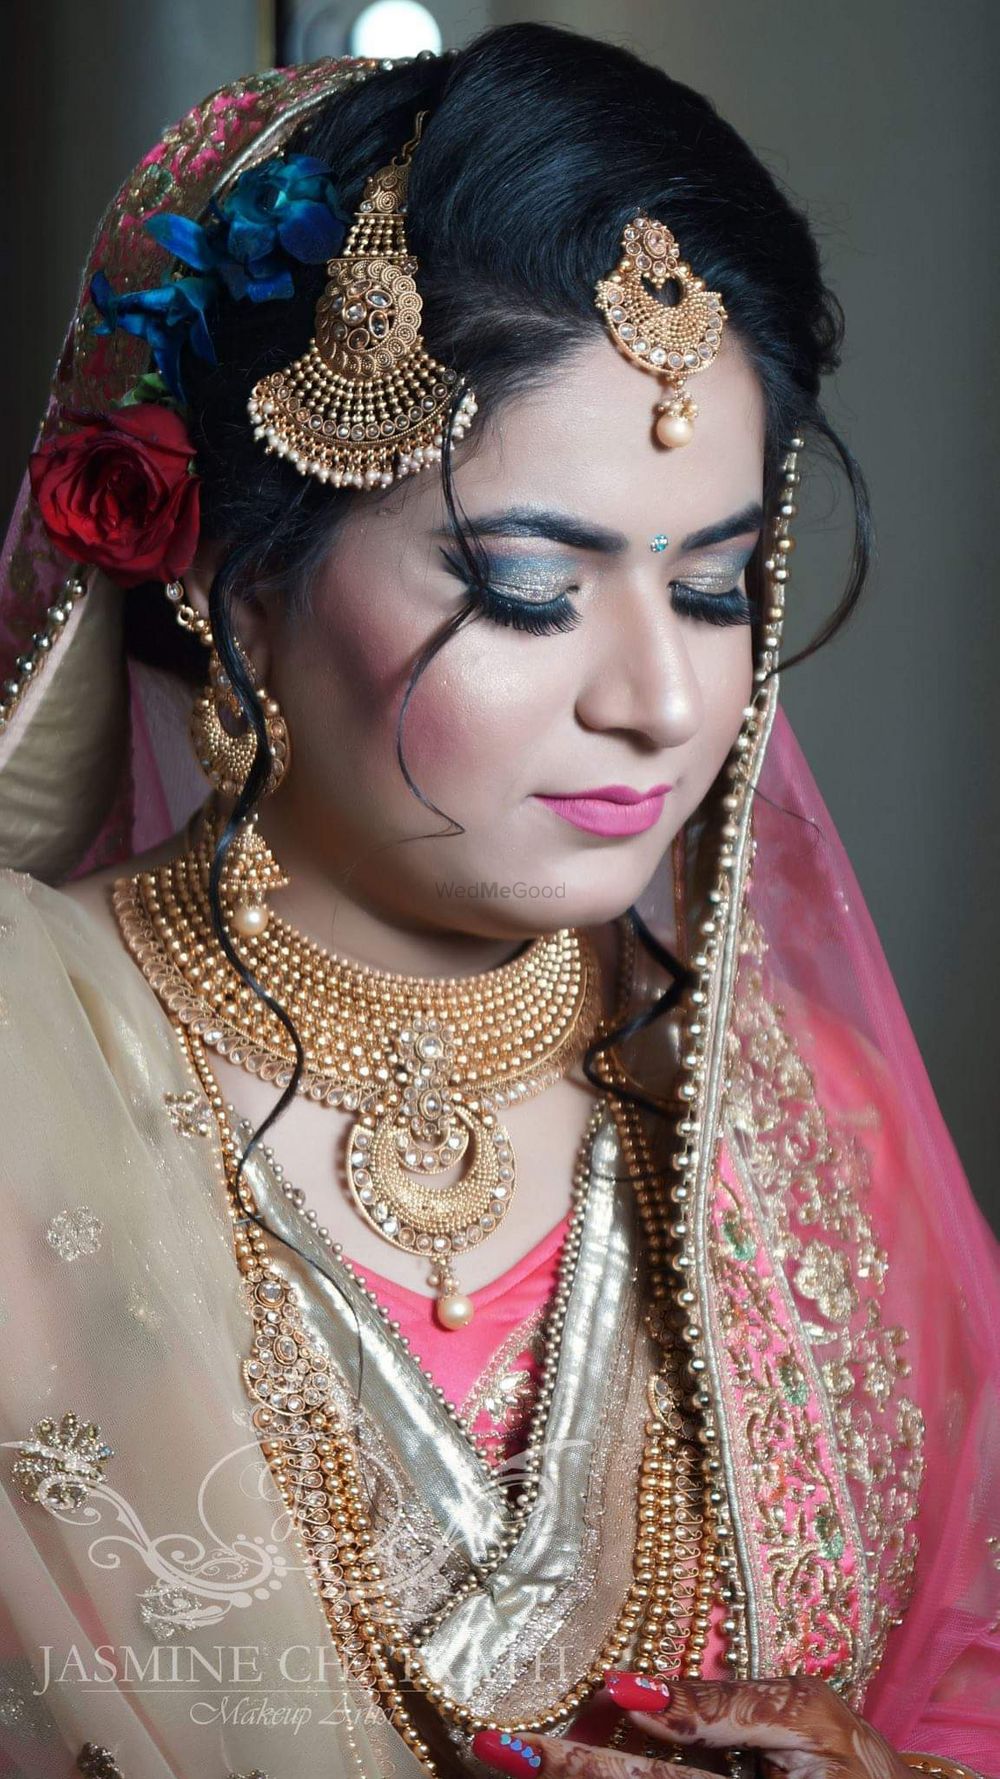 Photo By Jasmine Chatrath - Bridal Makeup